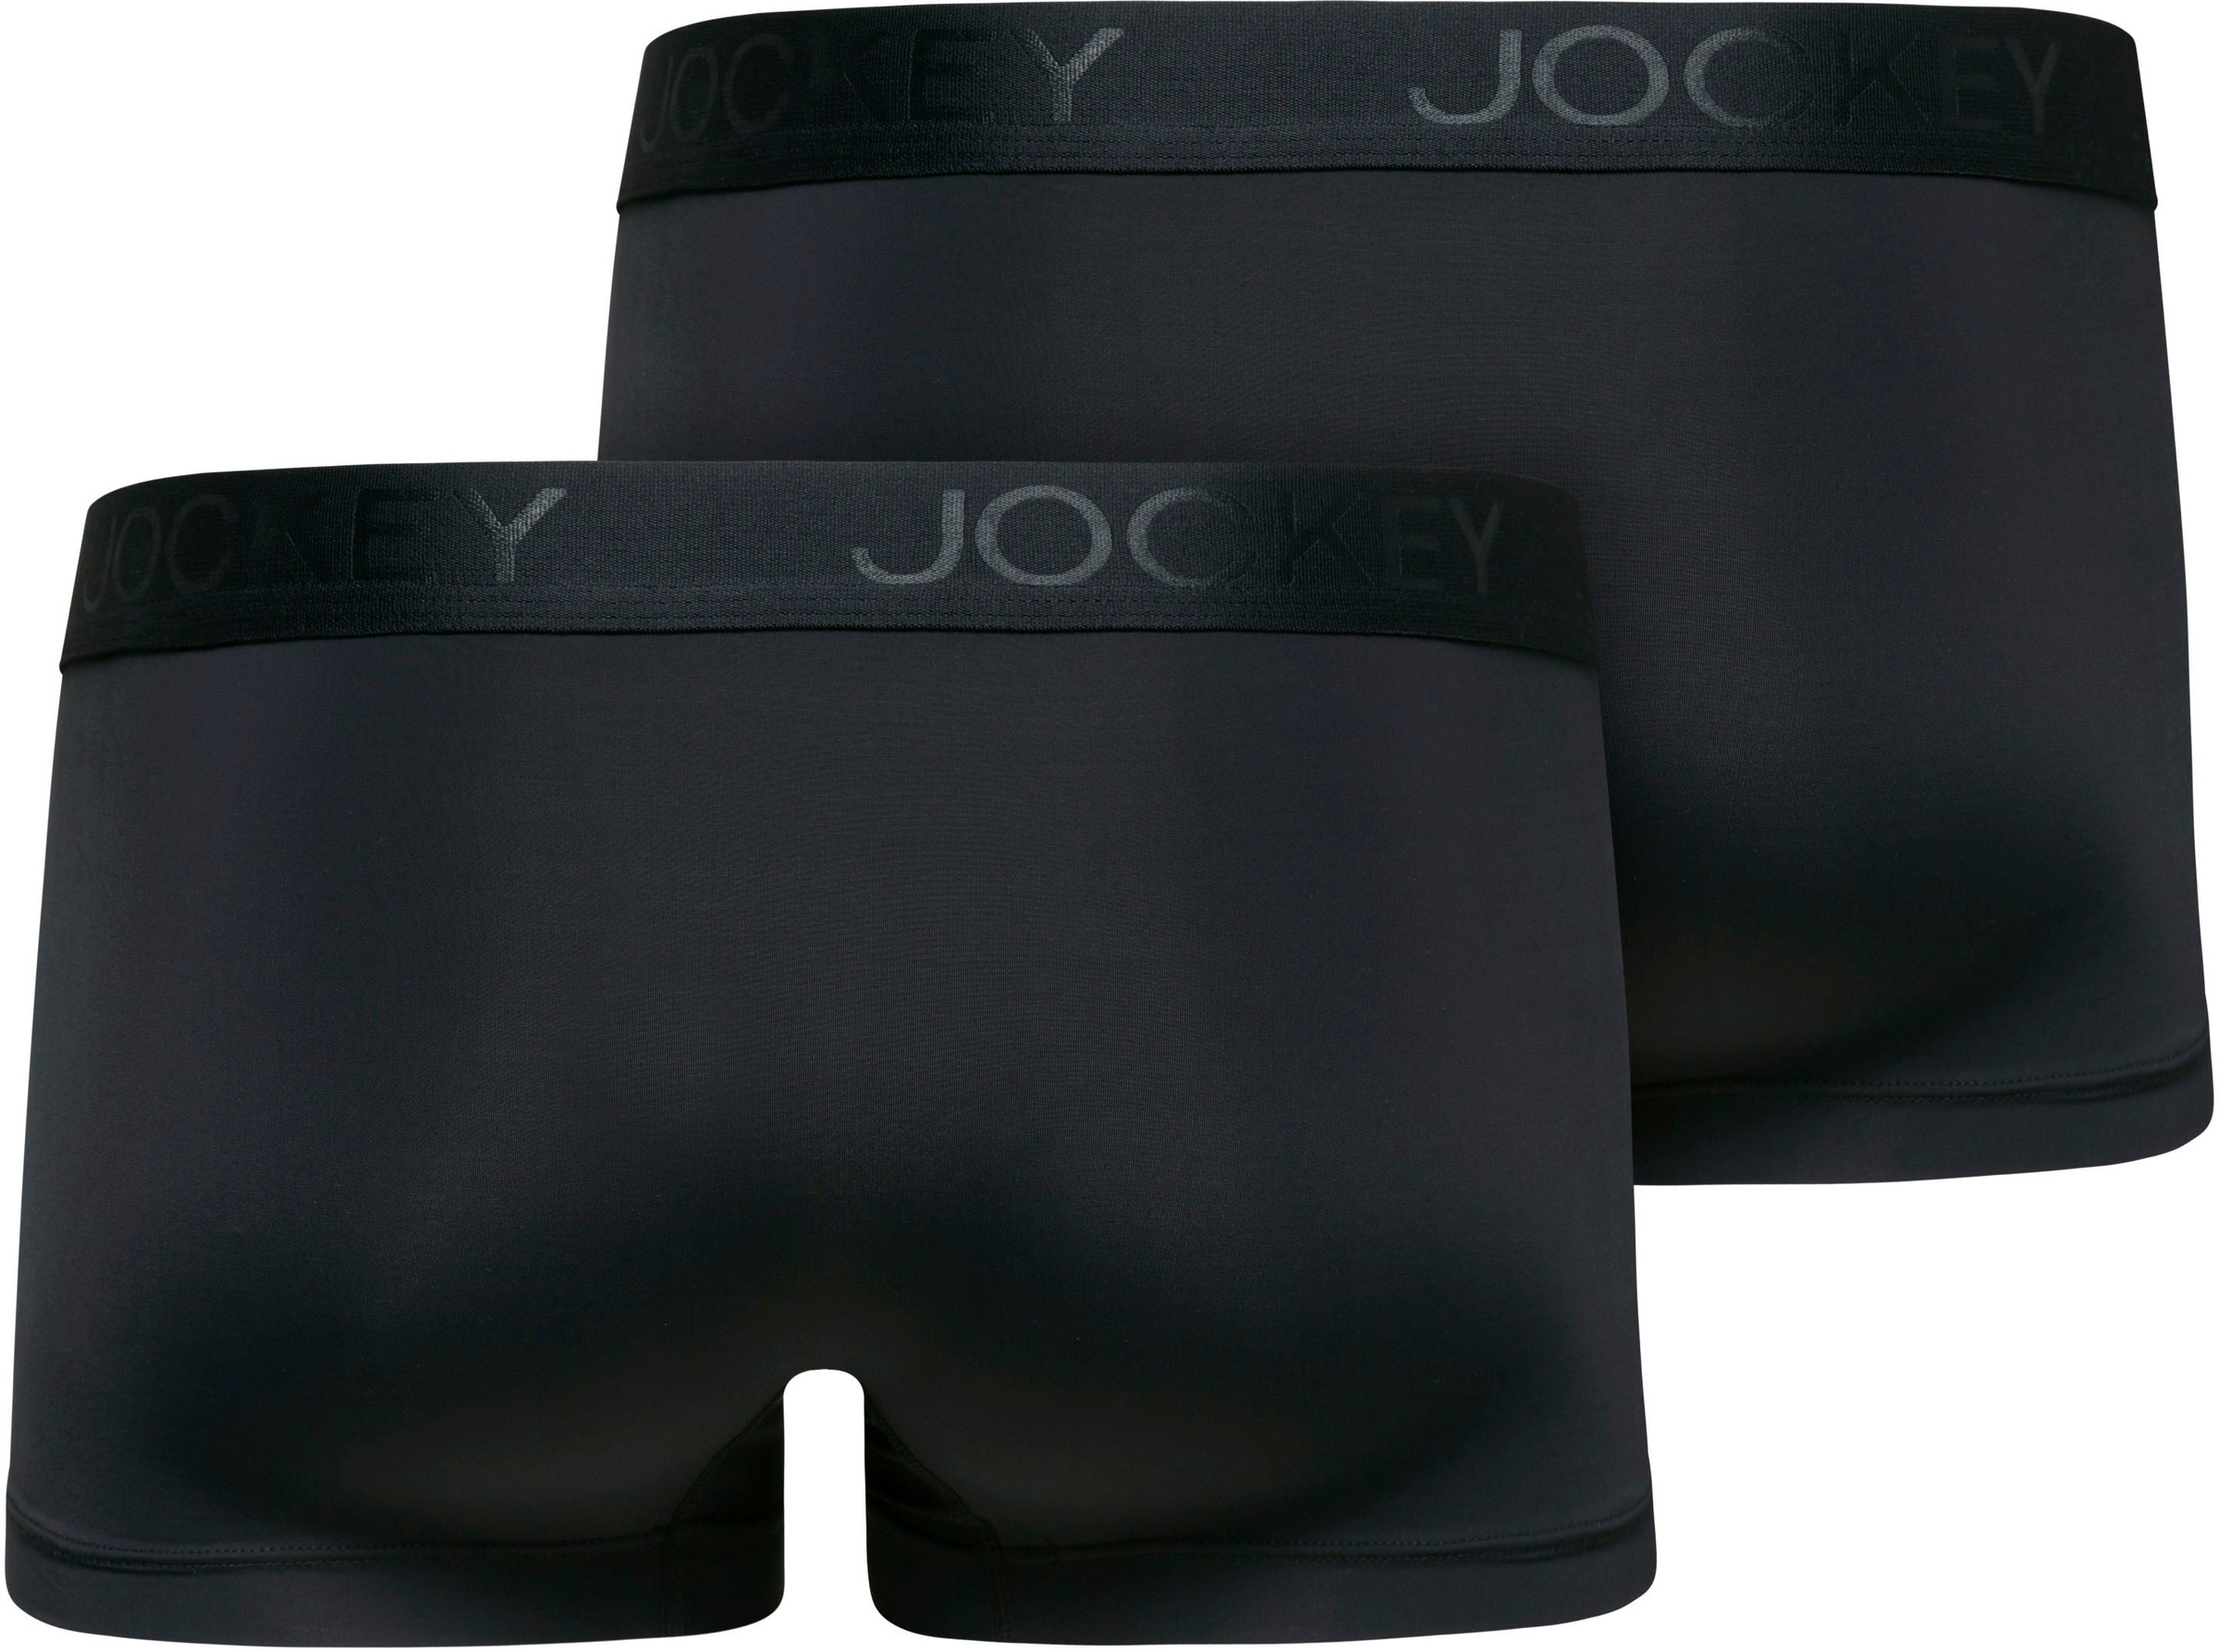 Jockey Trunk »Microfiber Air«, (Packung, 2 St.), schnell trocknendes, leichtes Material